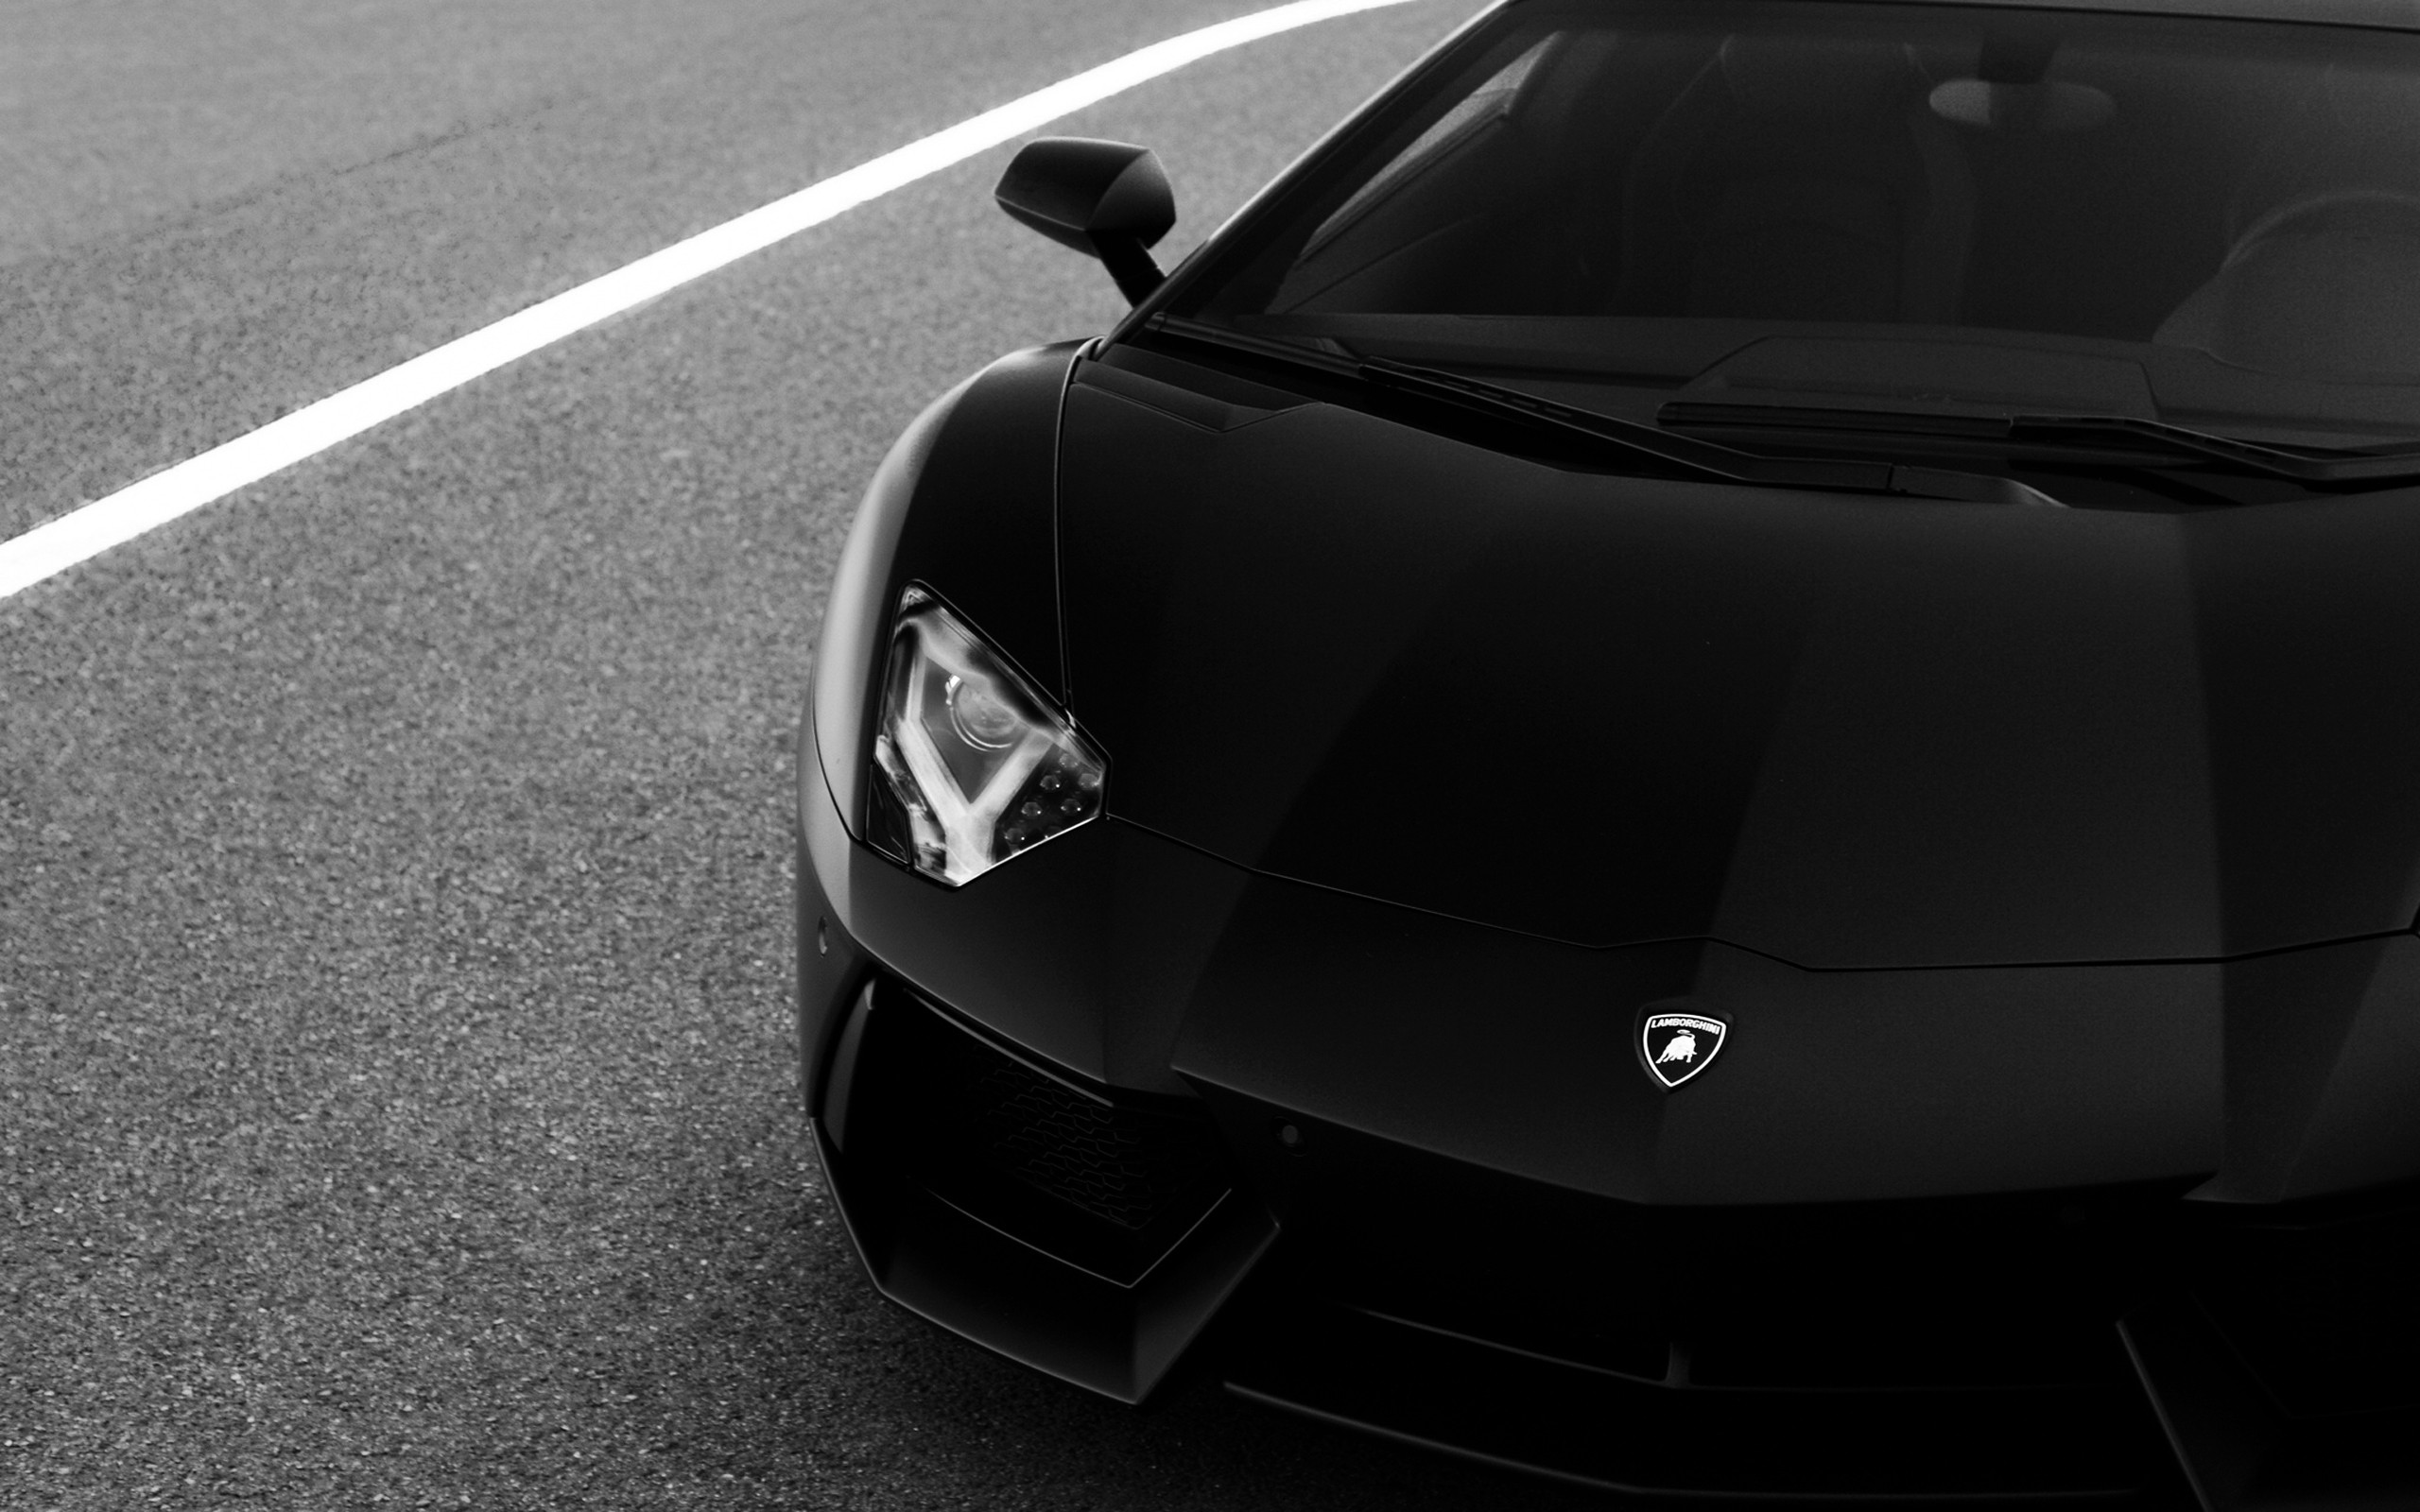 Hd Wallpaper Of Black Lamborghini